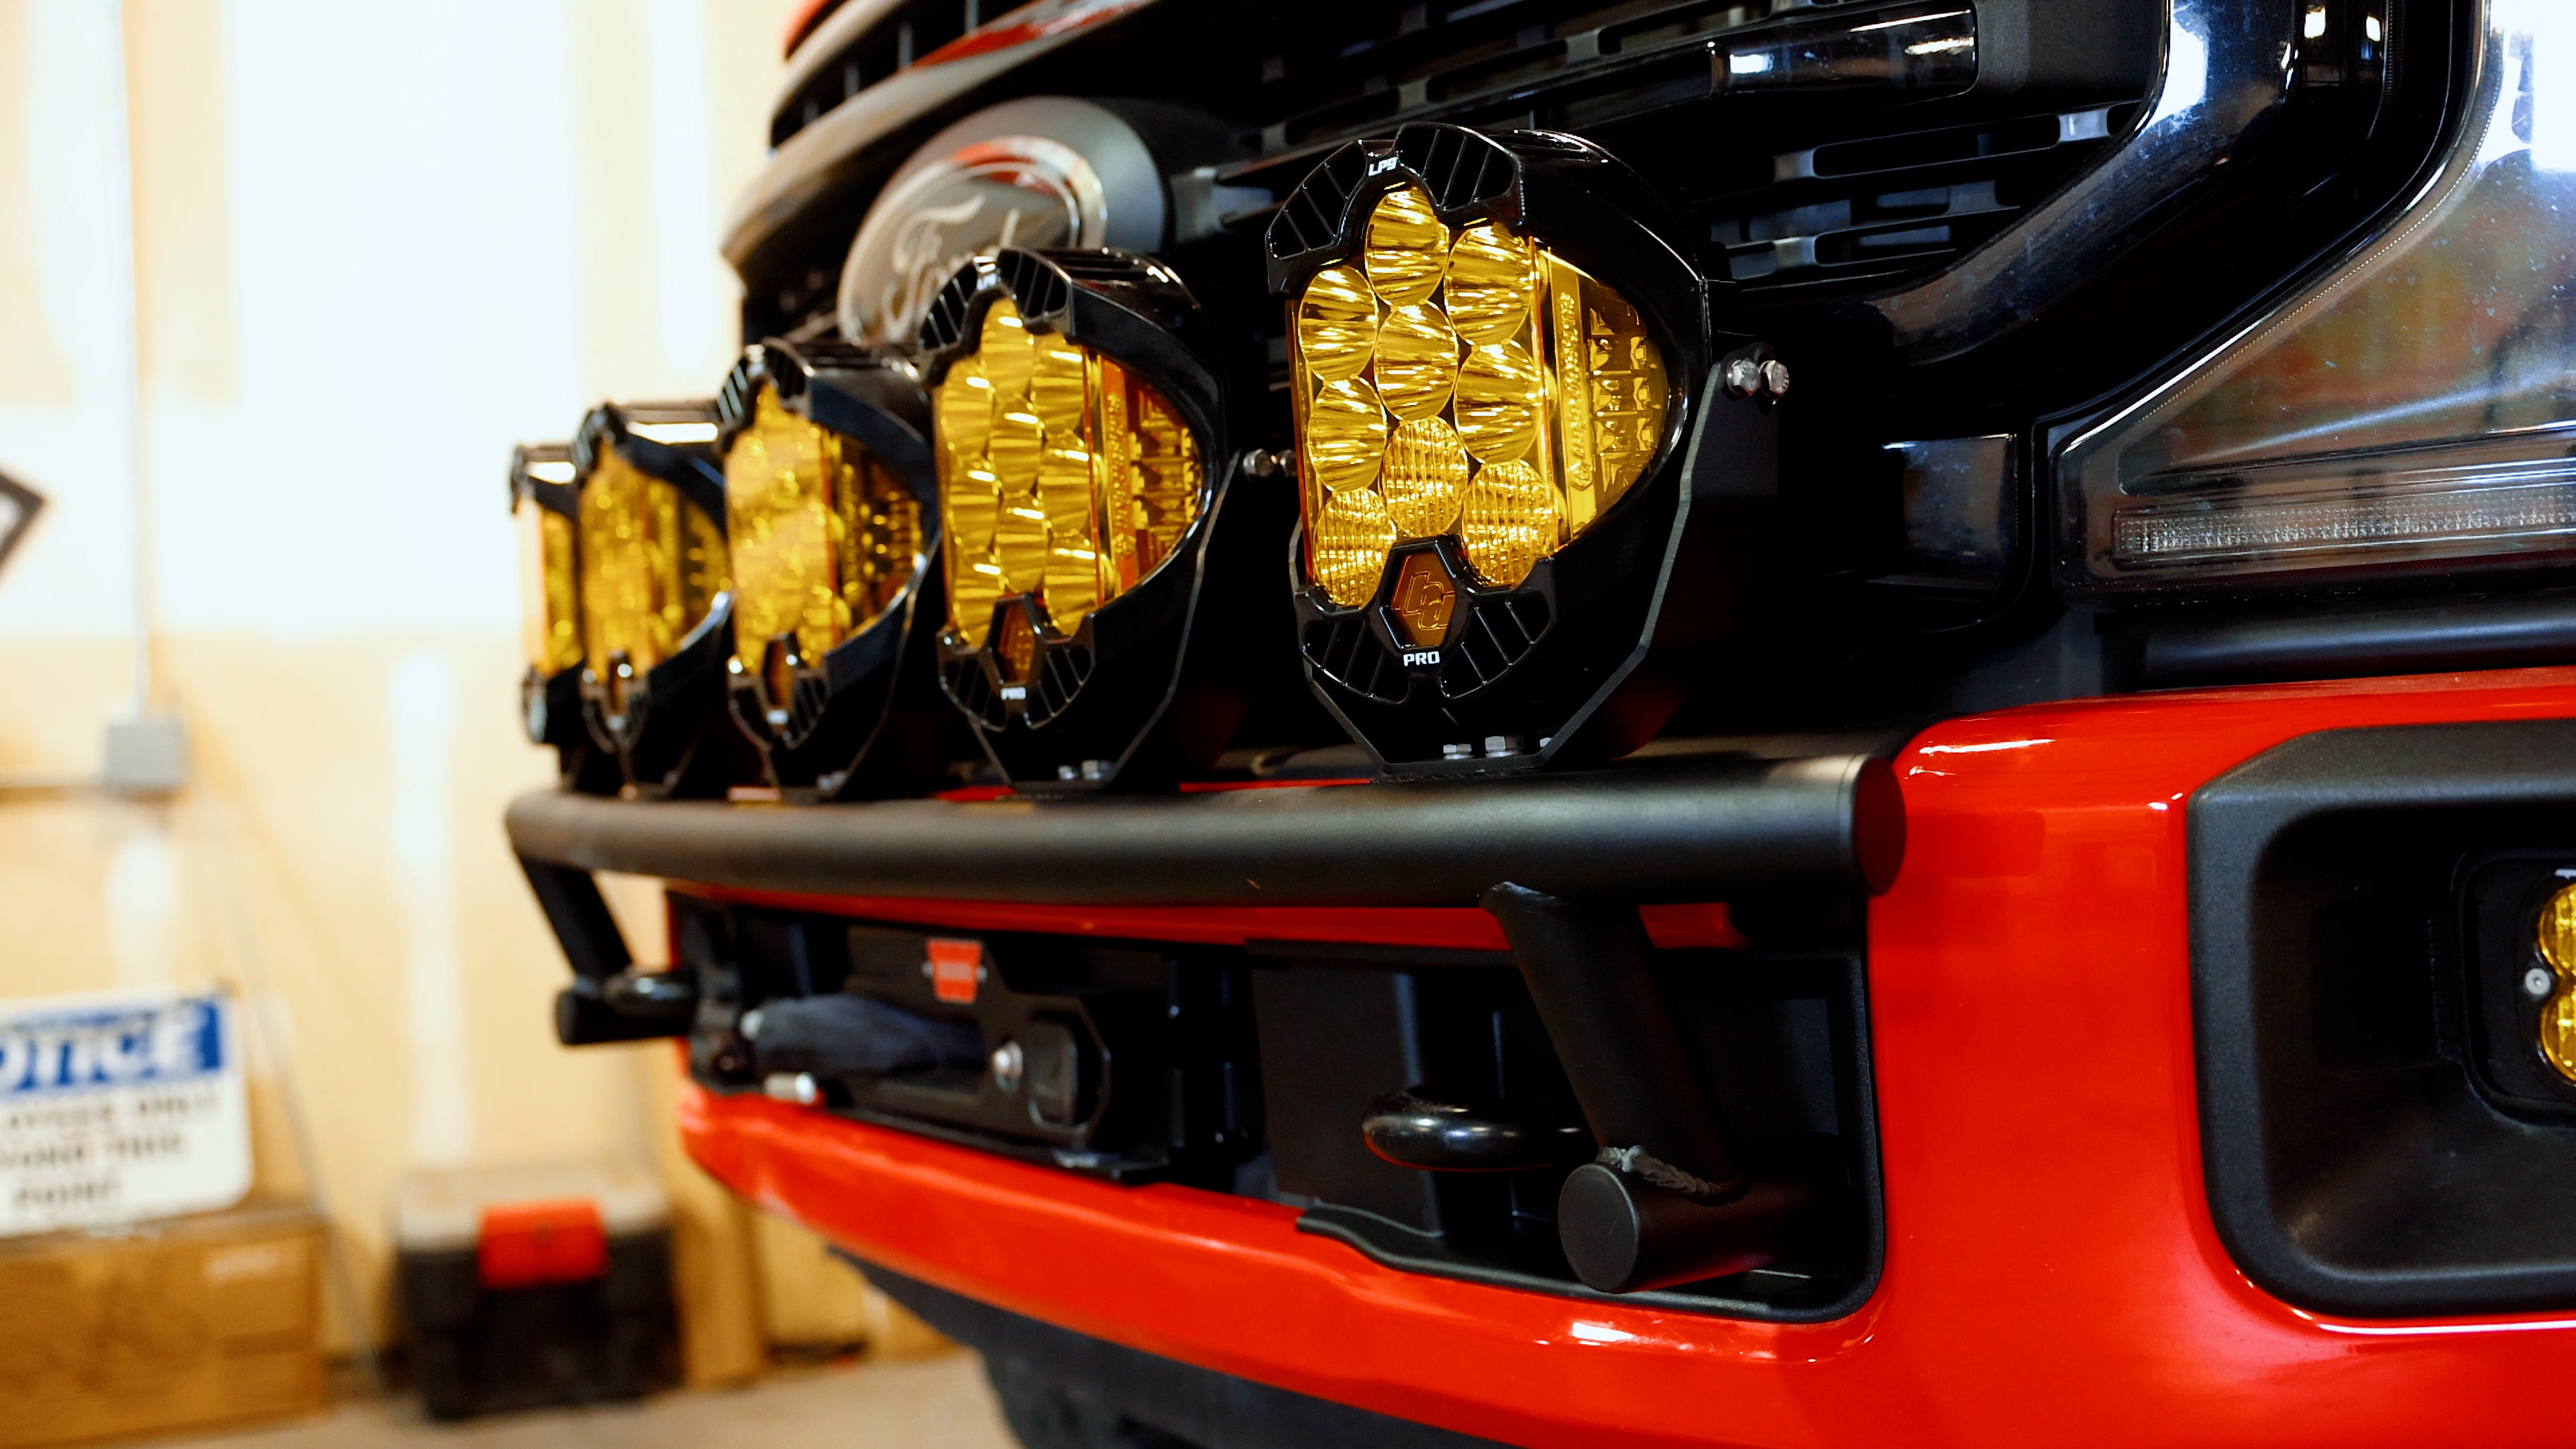 Baja Designs LP9s on GODZ MFG Front Bumper Light mount for Ford Super Duty Trucks